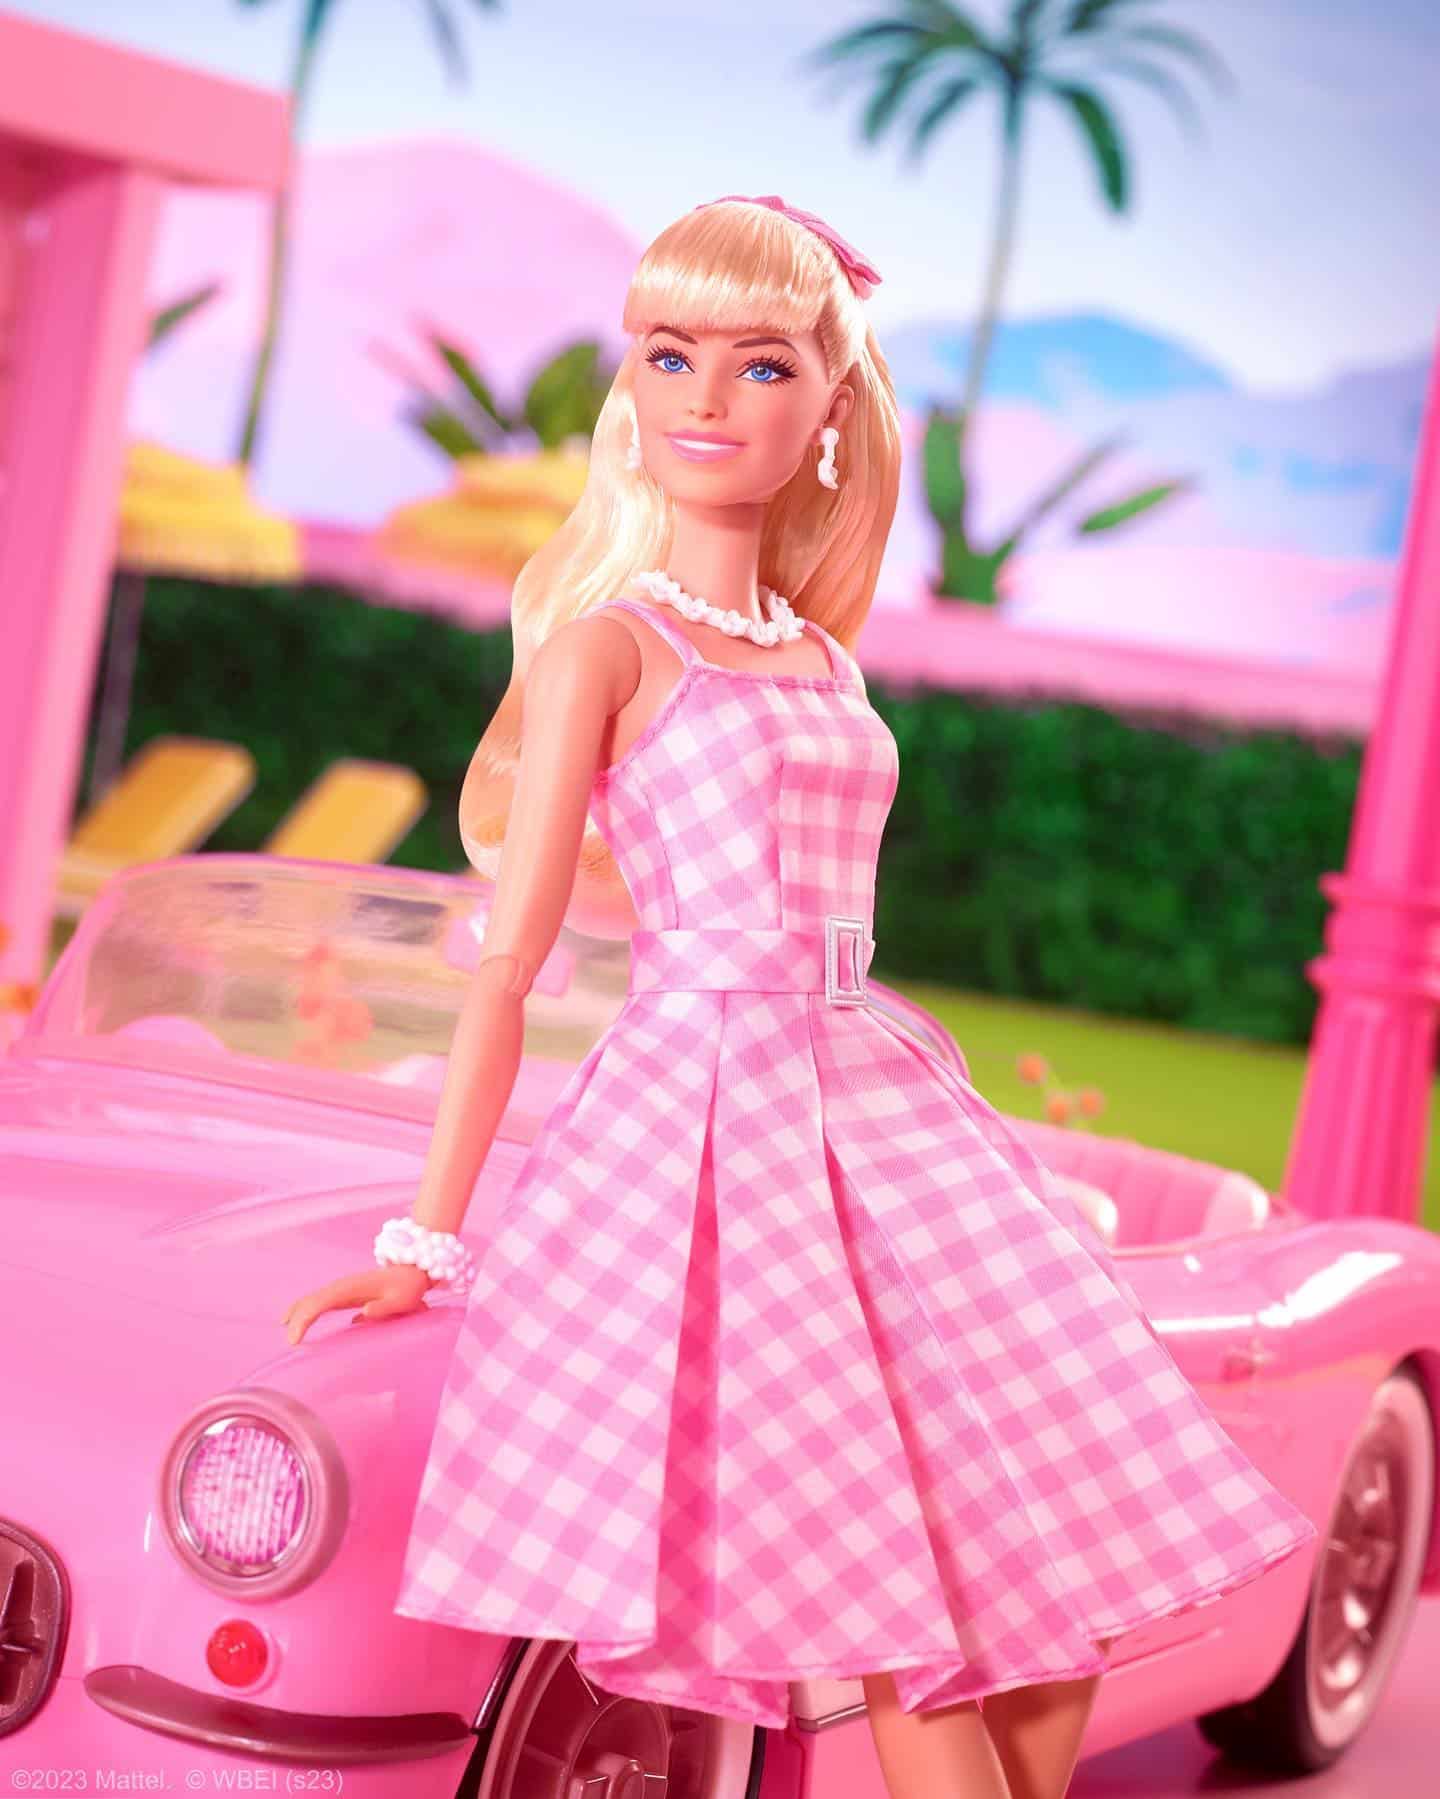 Barbie Ma premiere poupee Barbie - assortie